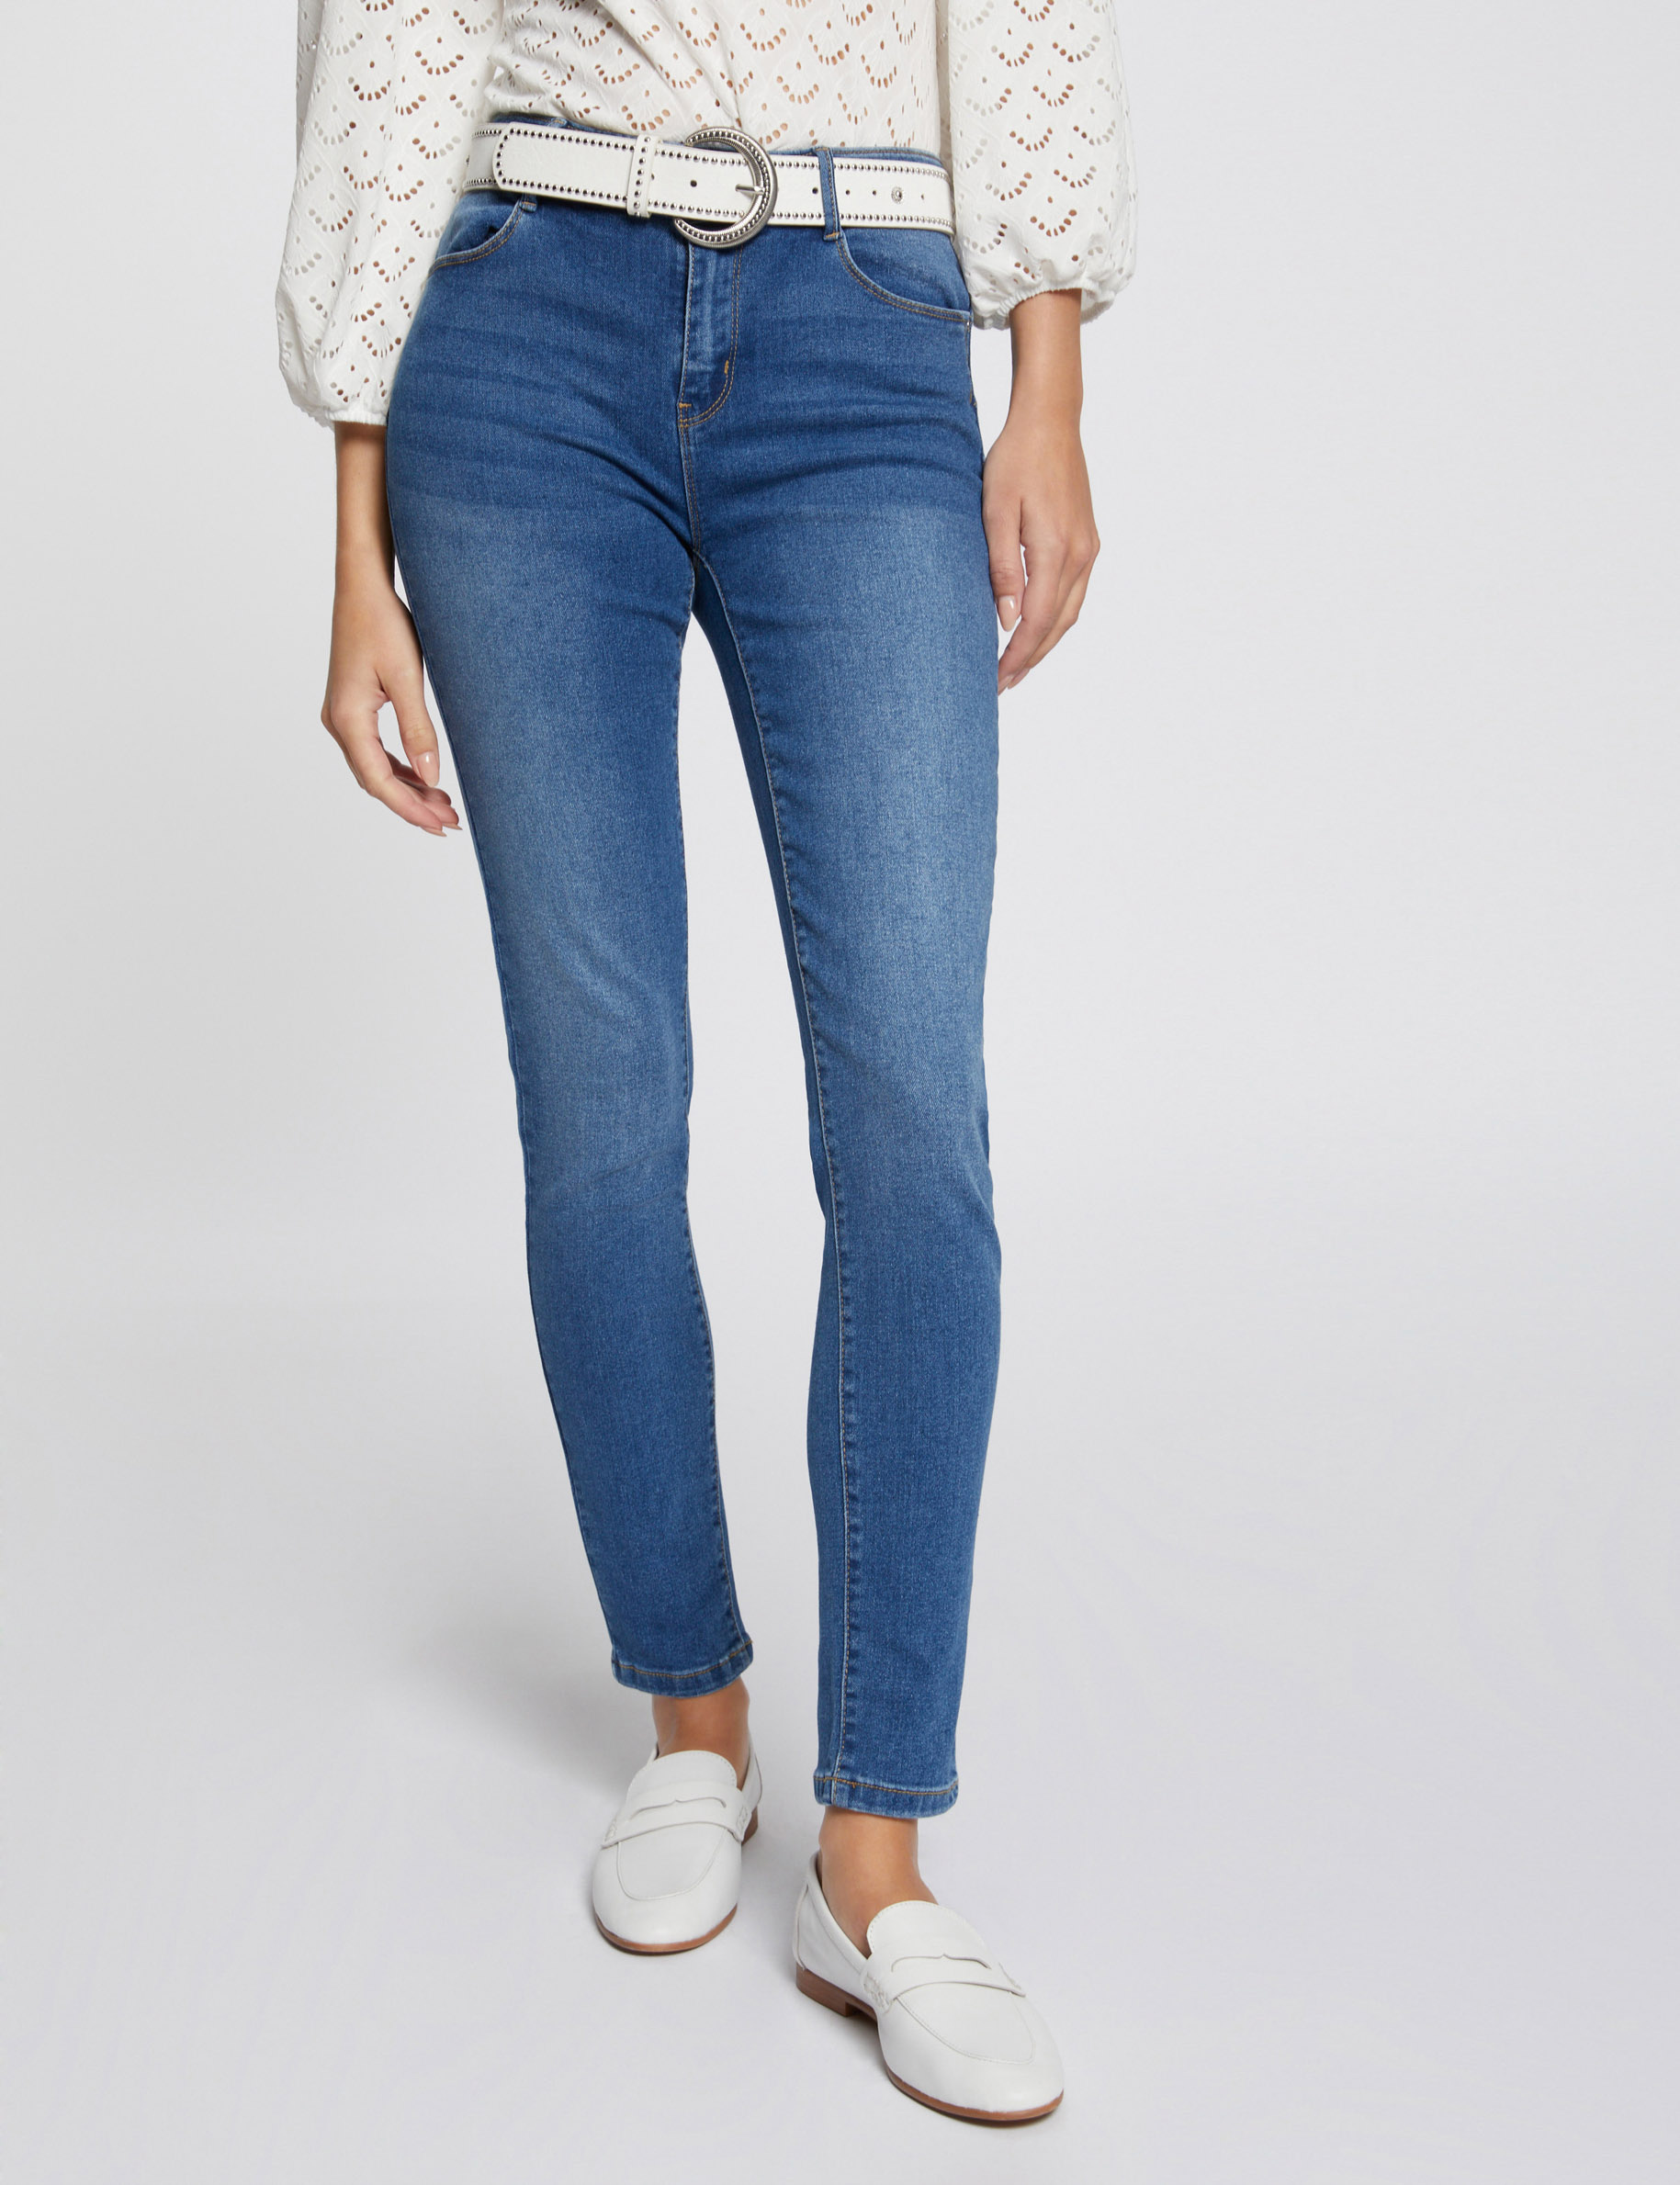 Jeans slim taille standard jean stone femme